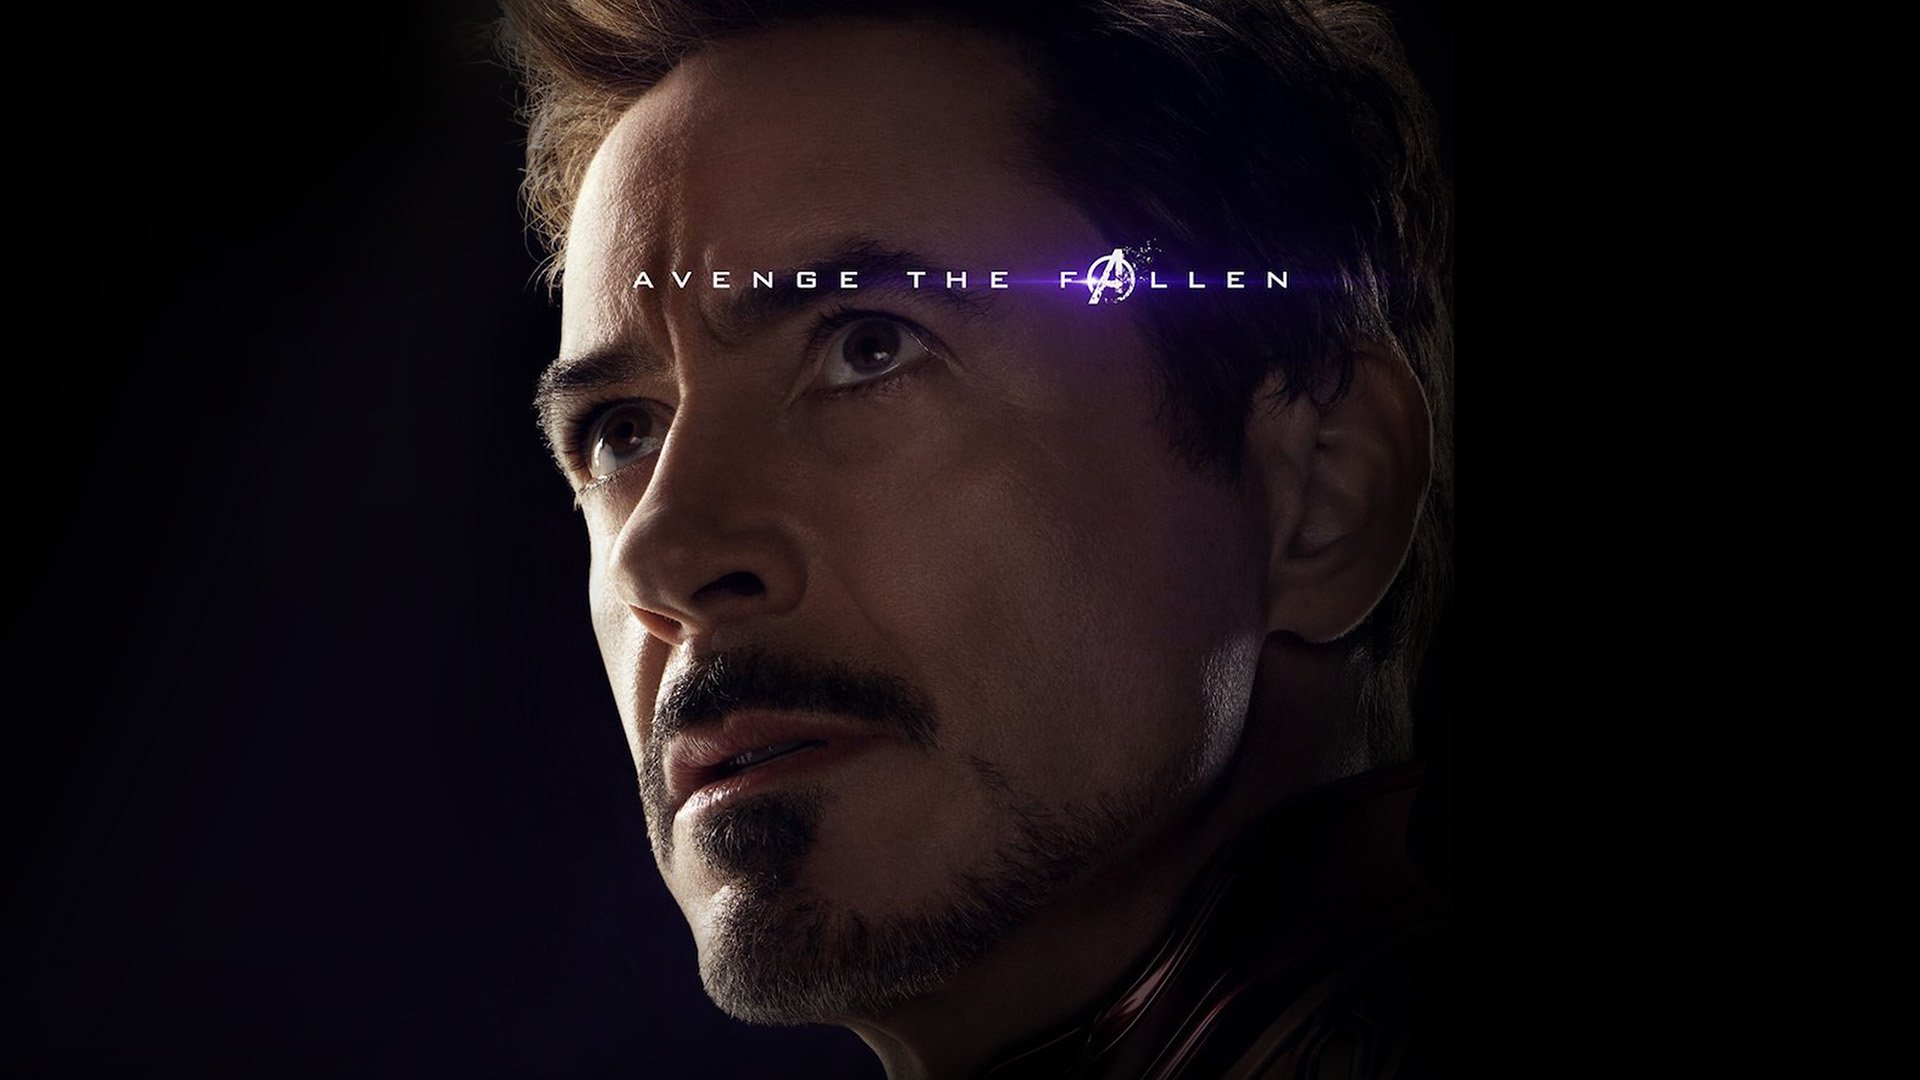 People 1920x1080 Iron Man Marvel Super Heroes Avengers Endgame Robert Downey Jr. movies men